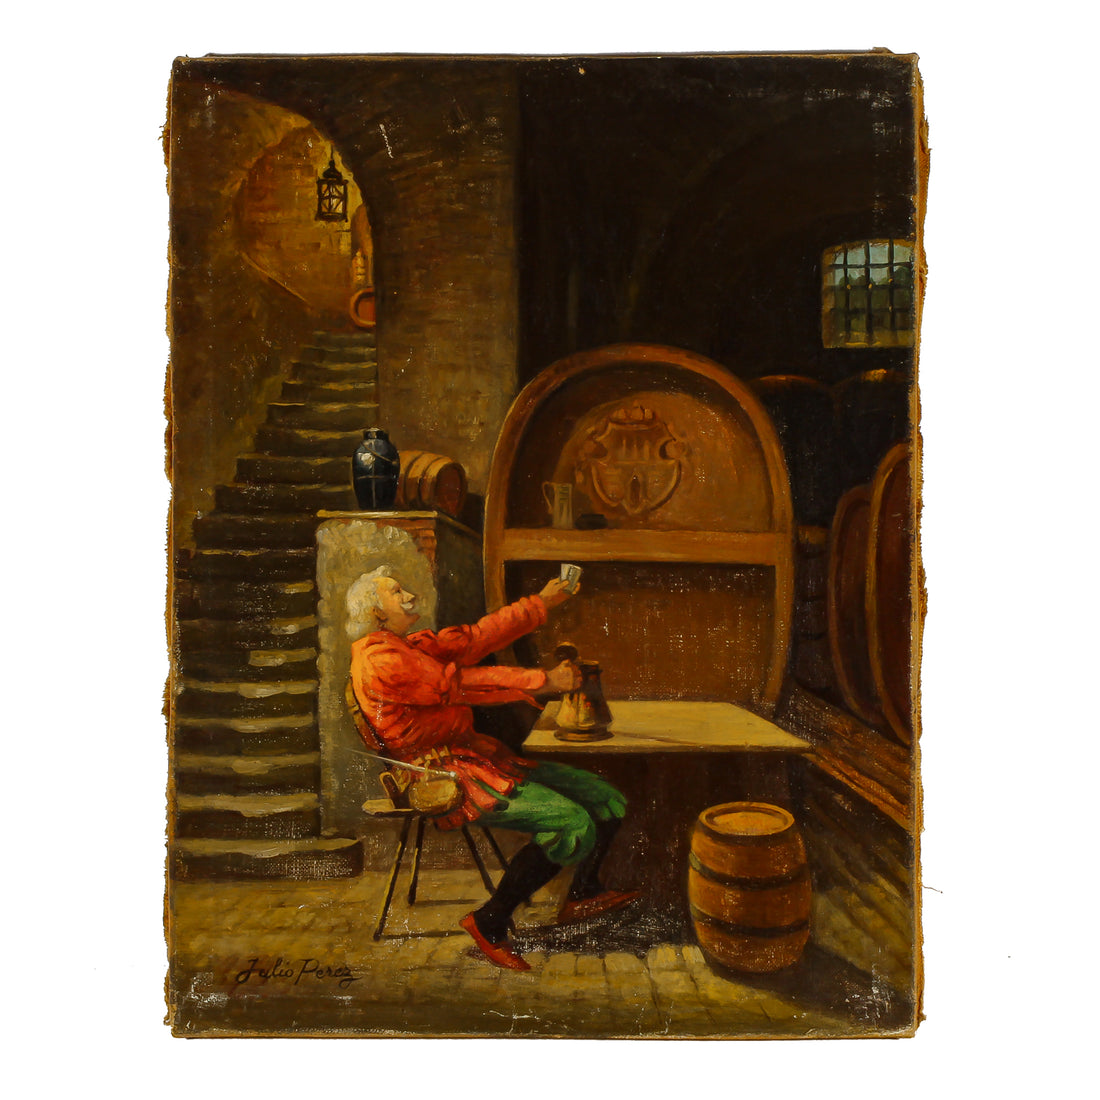 Julio Perez - "Man Drinking In Cellar" - Oil on Canvas